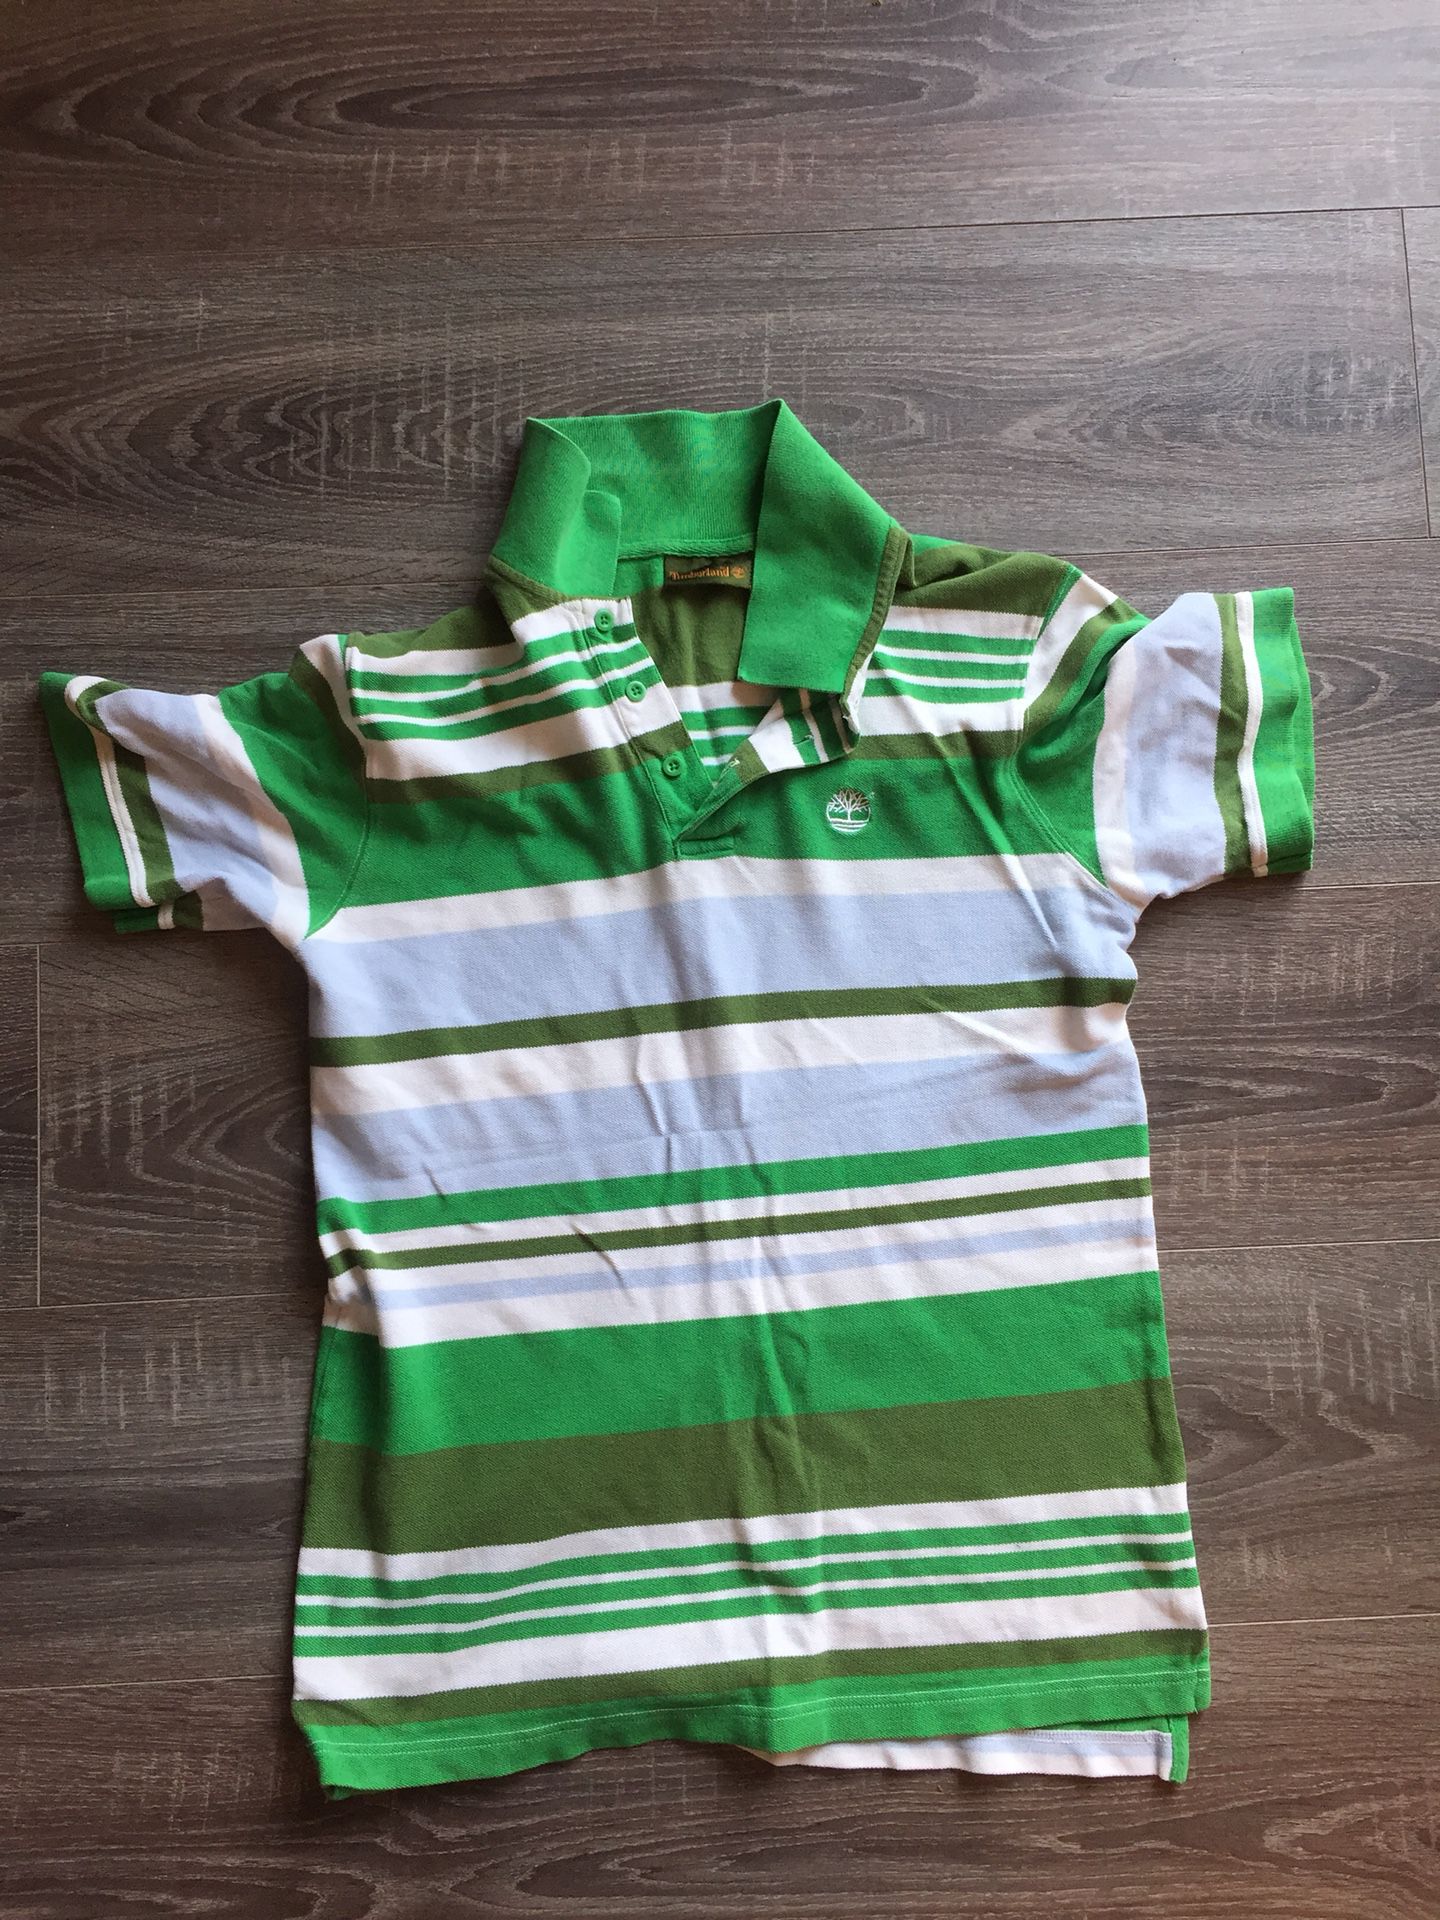 Timberland polo shirt size S